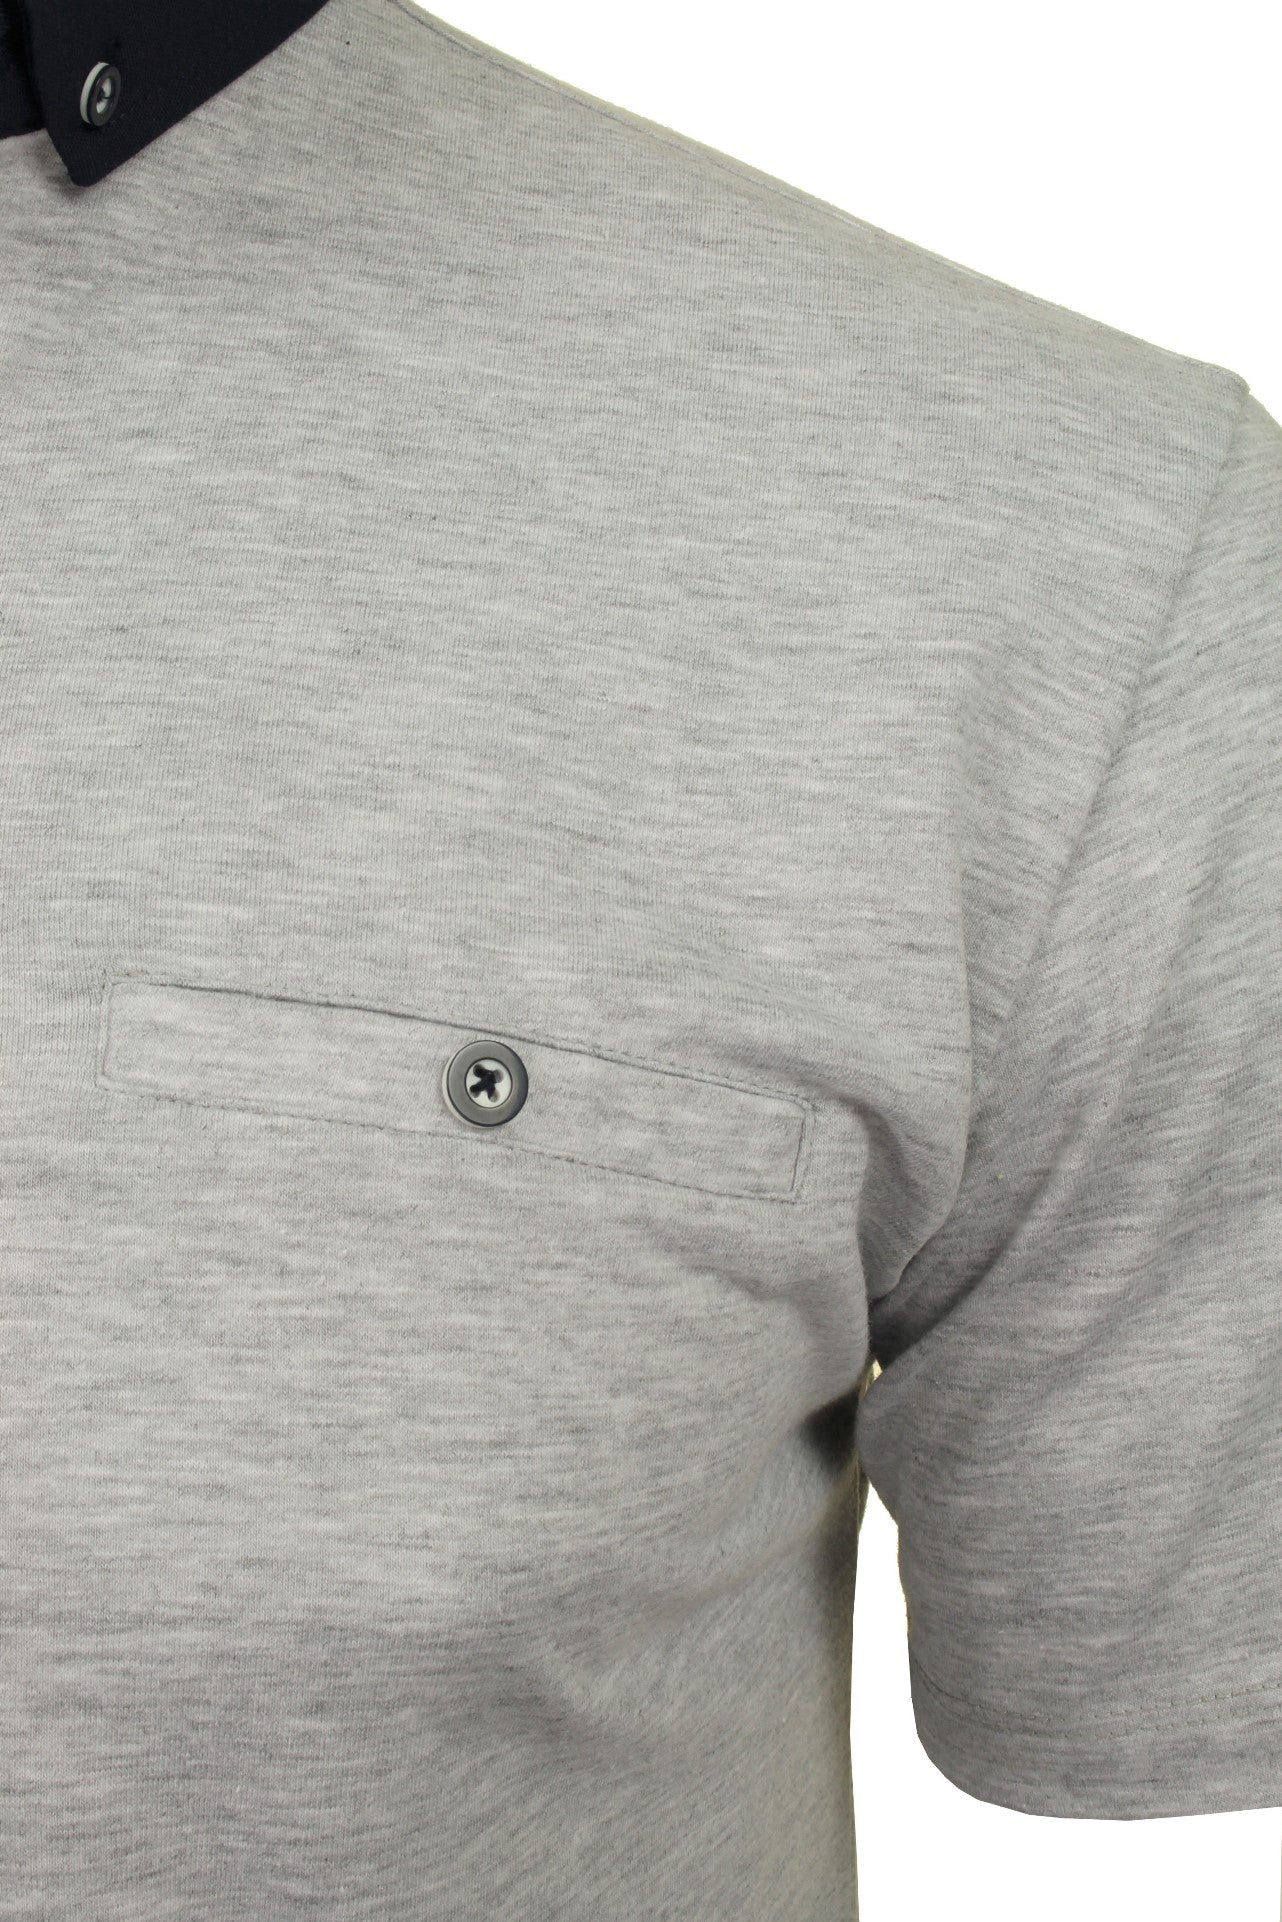 Xact Mens Polo T-Shirt - Short Sleeved-2